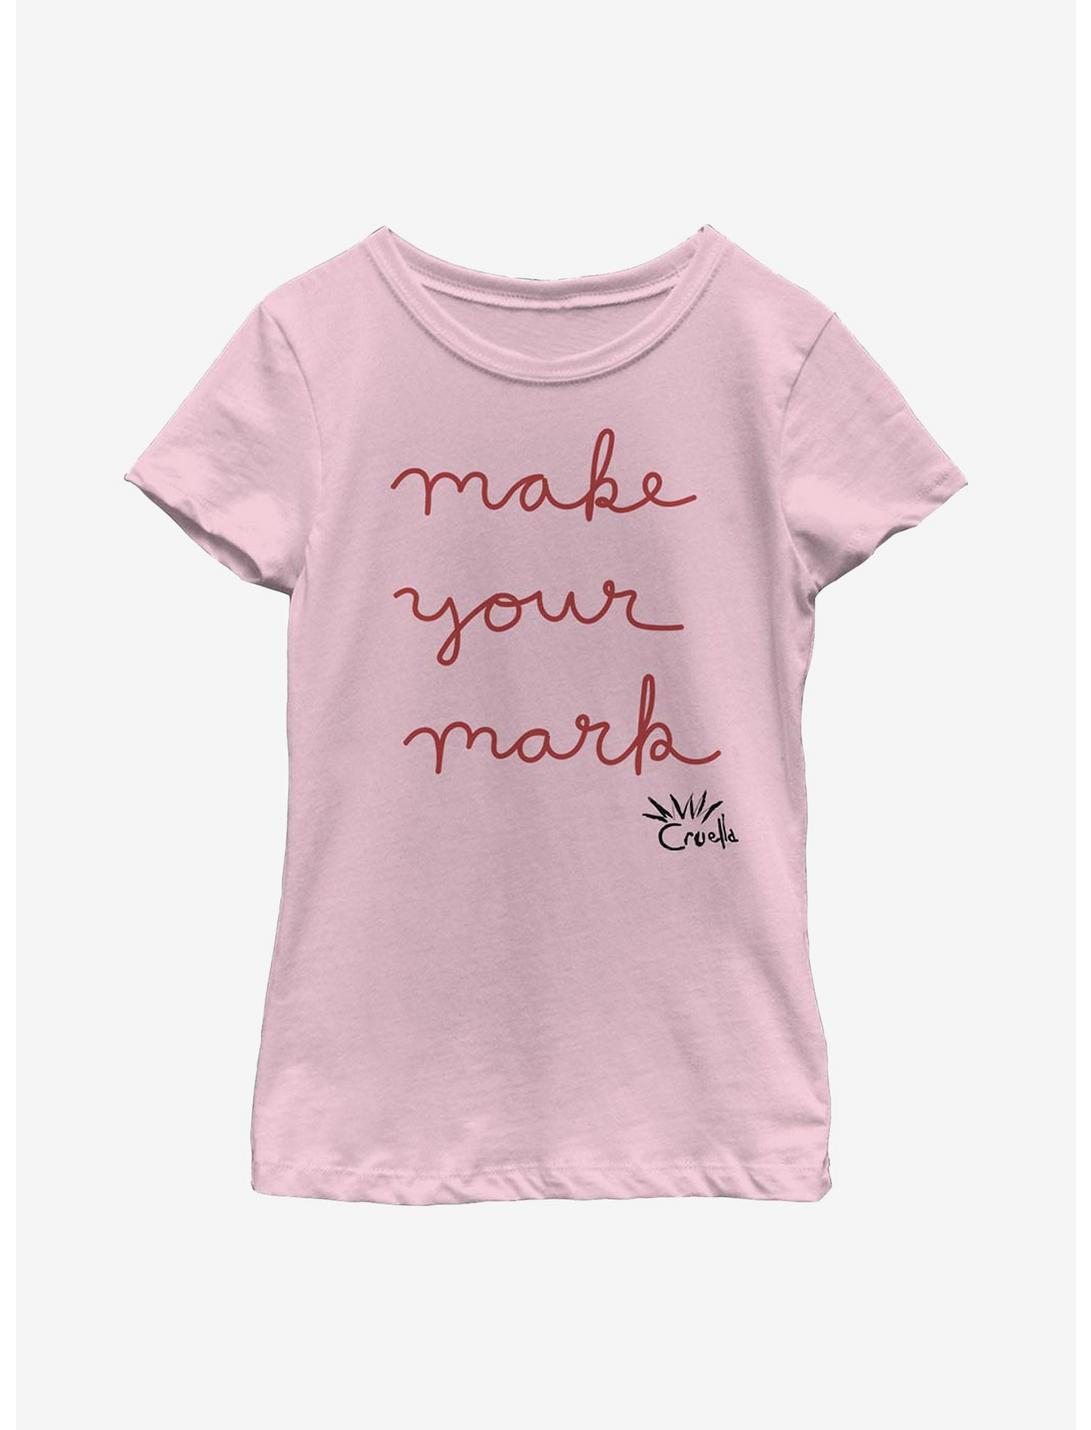 Disney Cruella Make Your Mark Youth Girls T-Shirt, PINK, hi-res